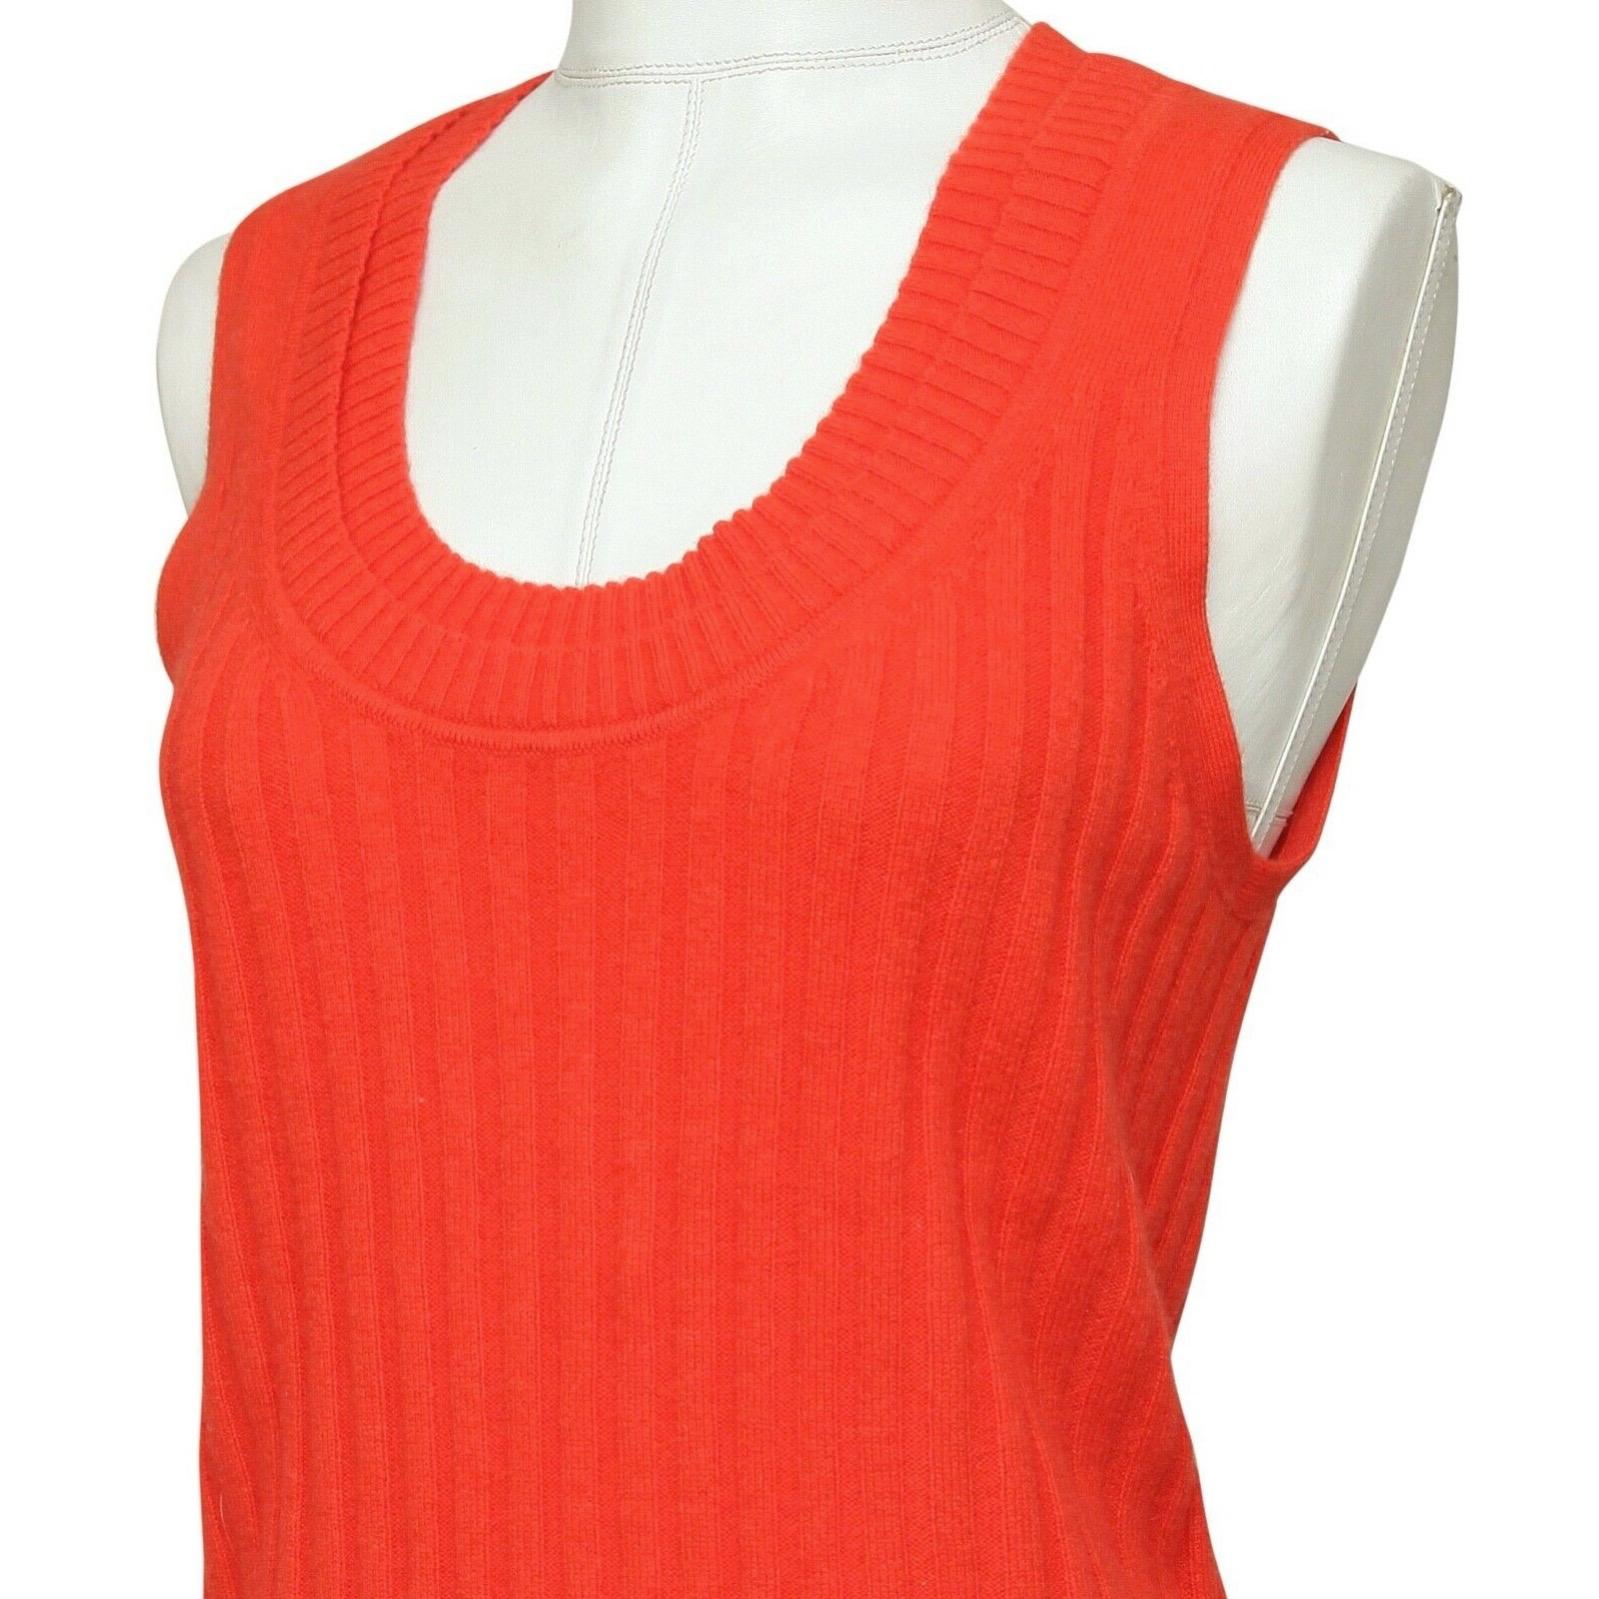 Women's 3.1 PHILLIP LIM Orange Sweater Knit Sleeveless Scoop Neck Ribbed Cashmere L NWT